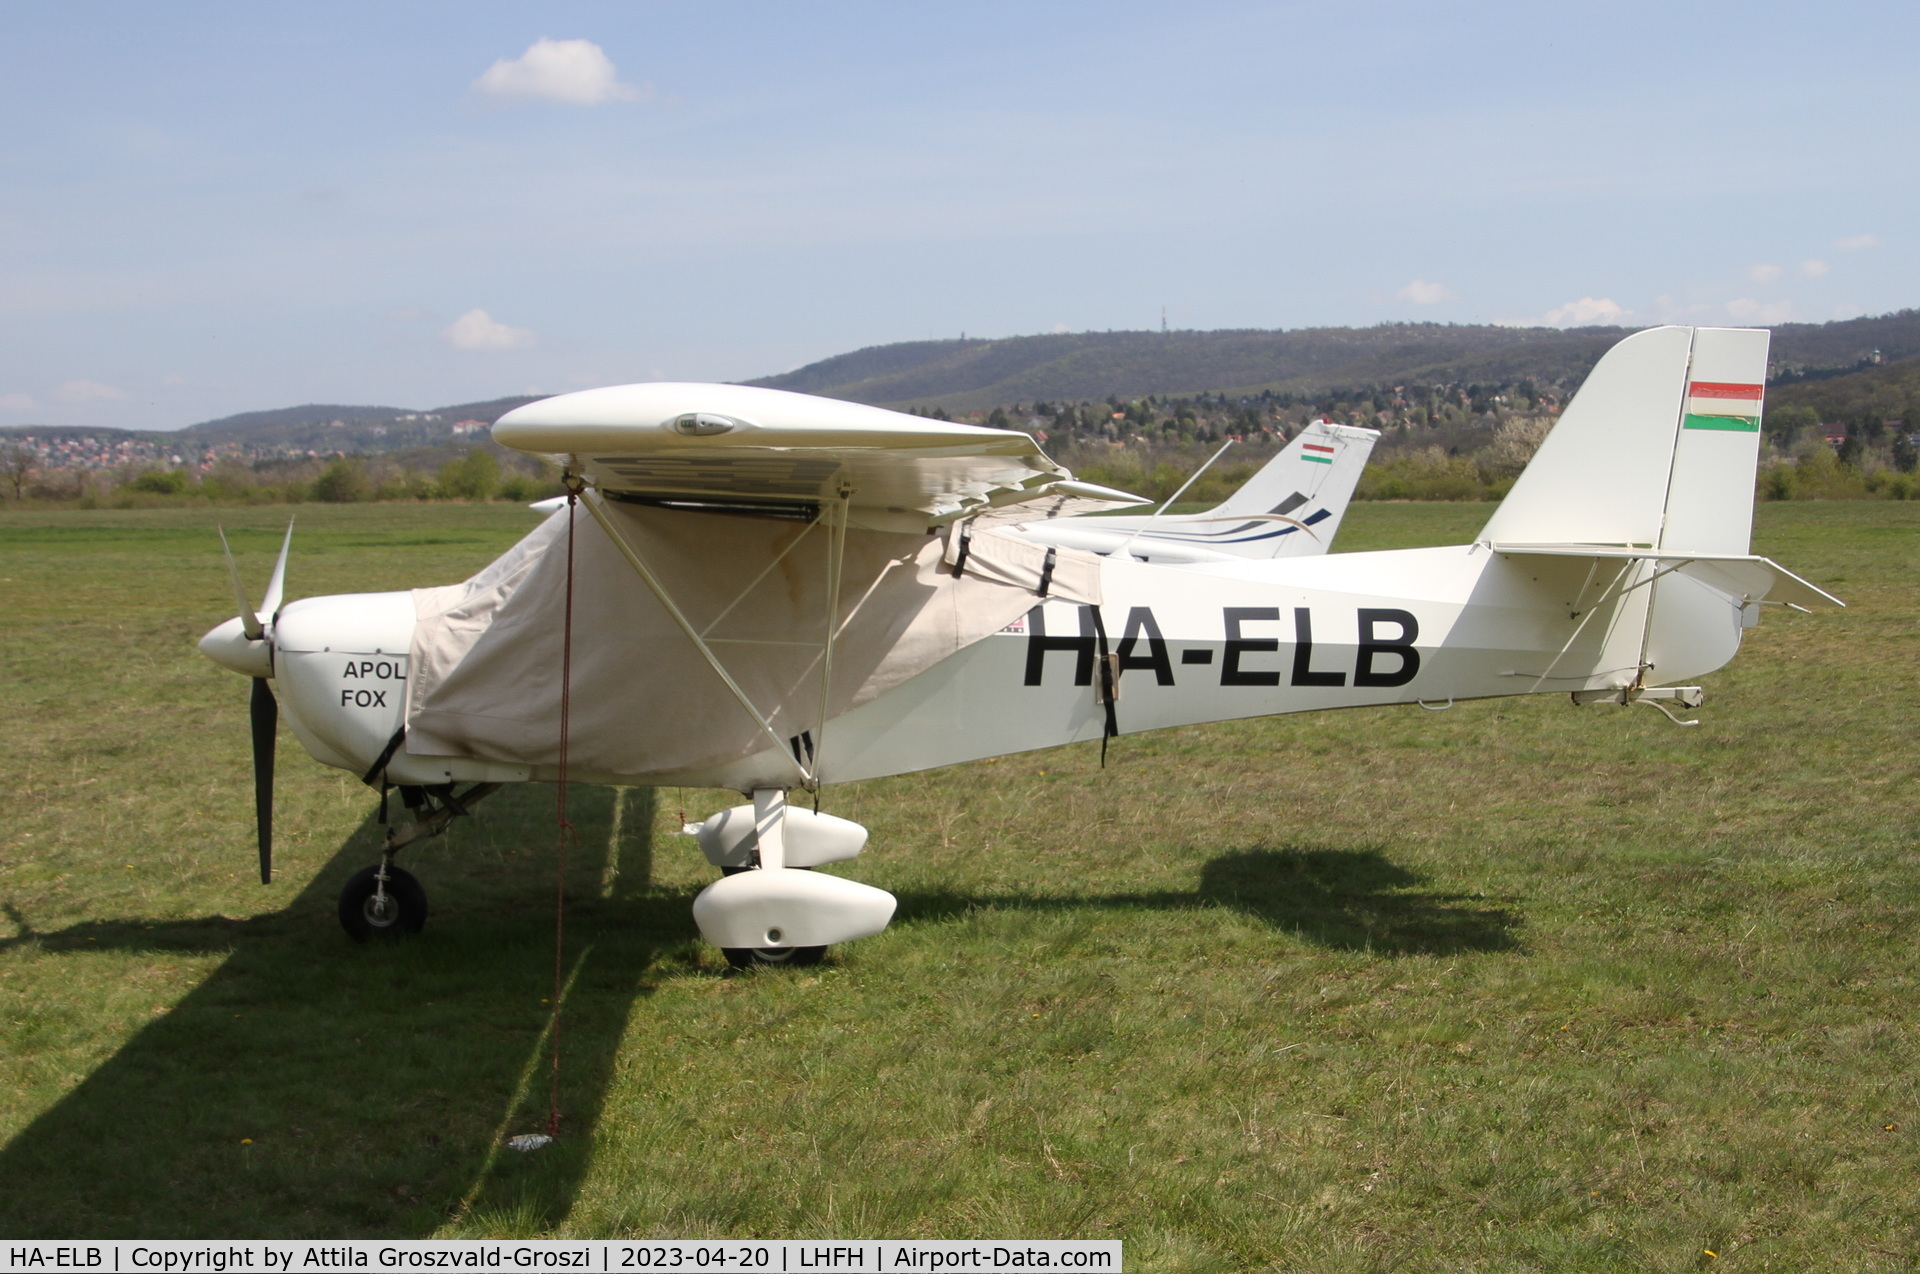 HA-ELB, Halley Apollo Fox C/N 9451/99, LHFH - Farkashegy Airport, Budakeszi - Hungary